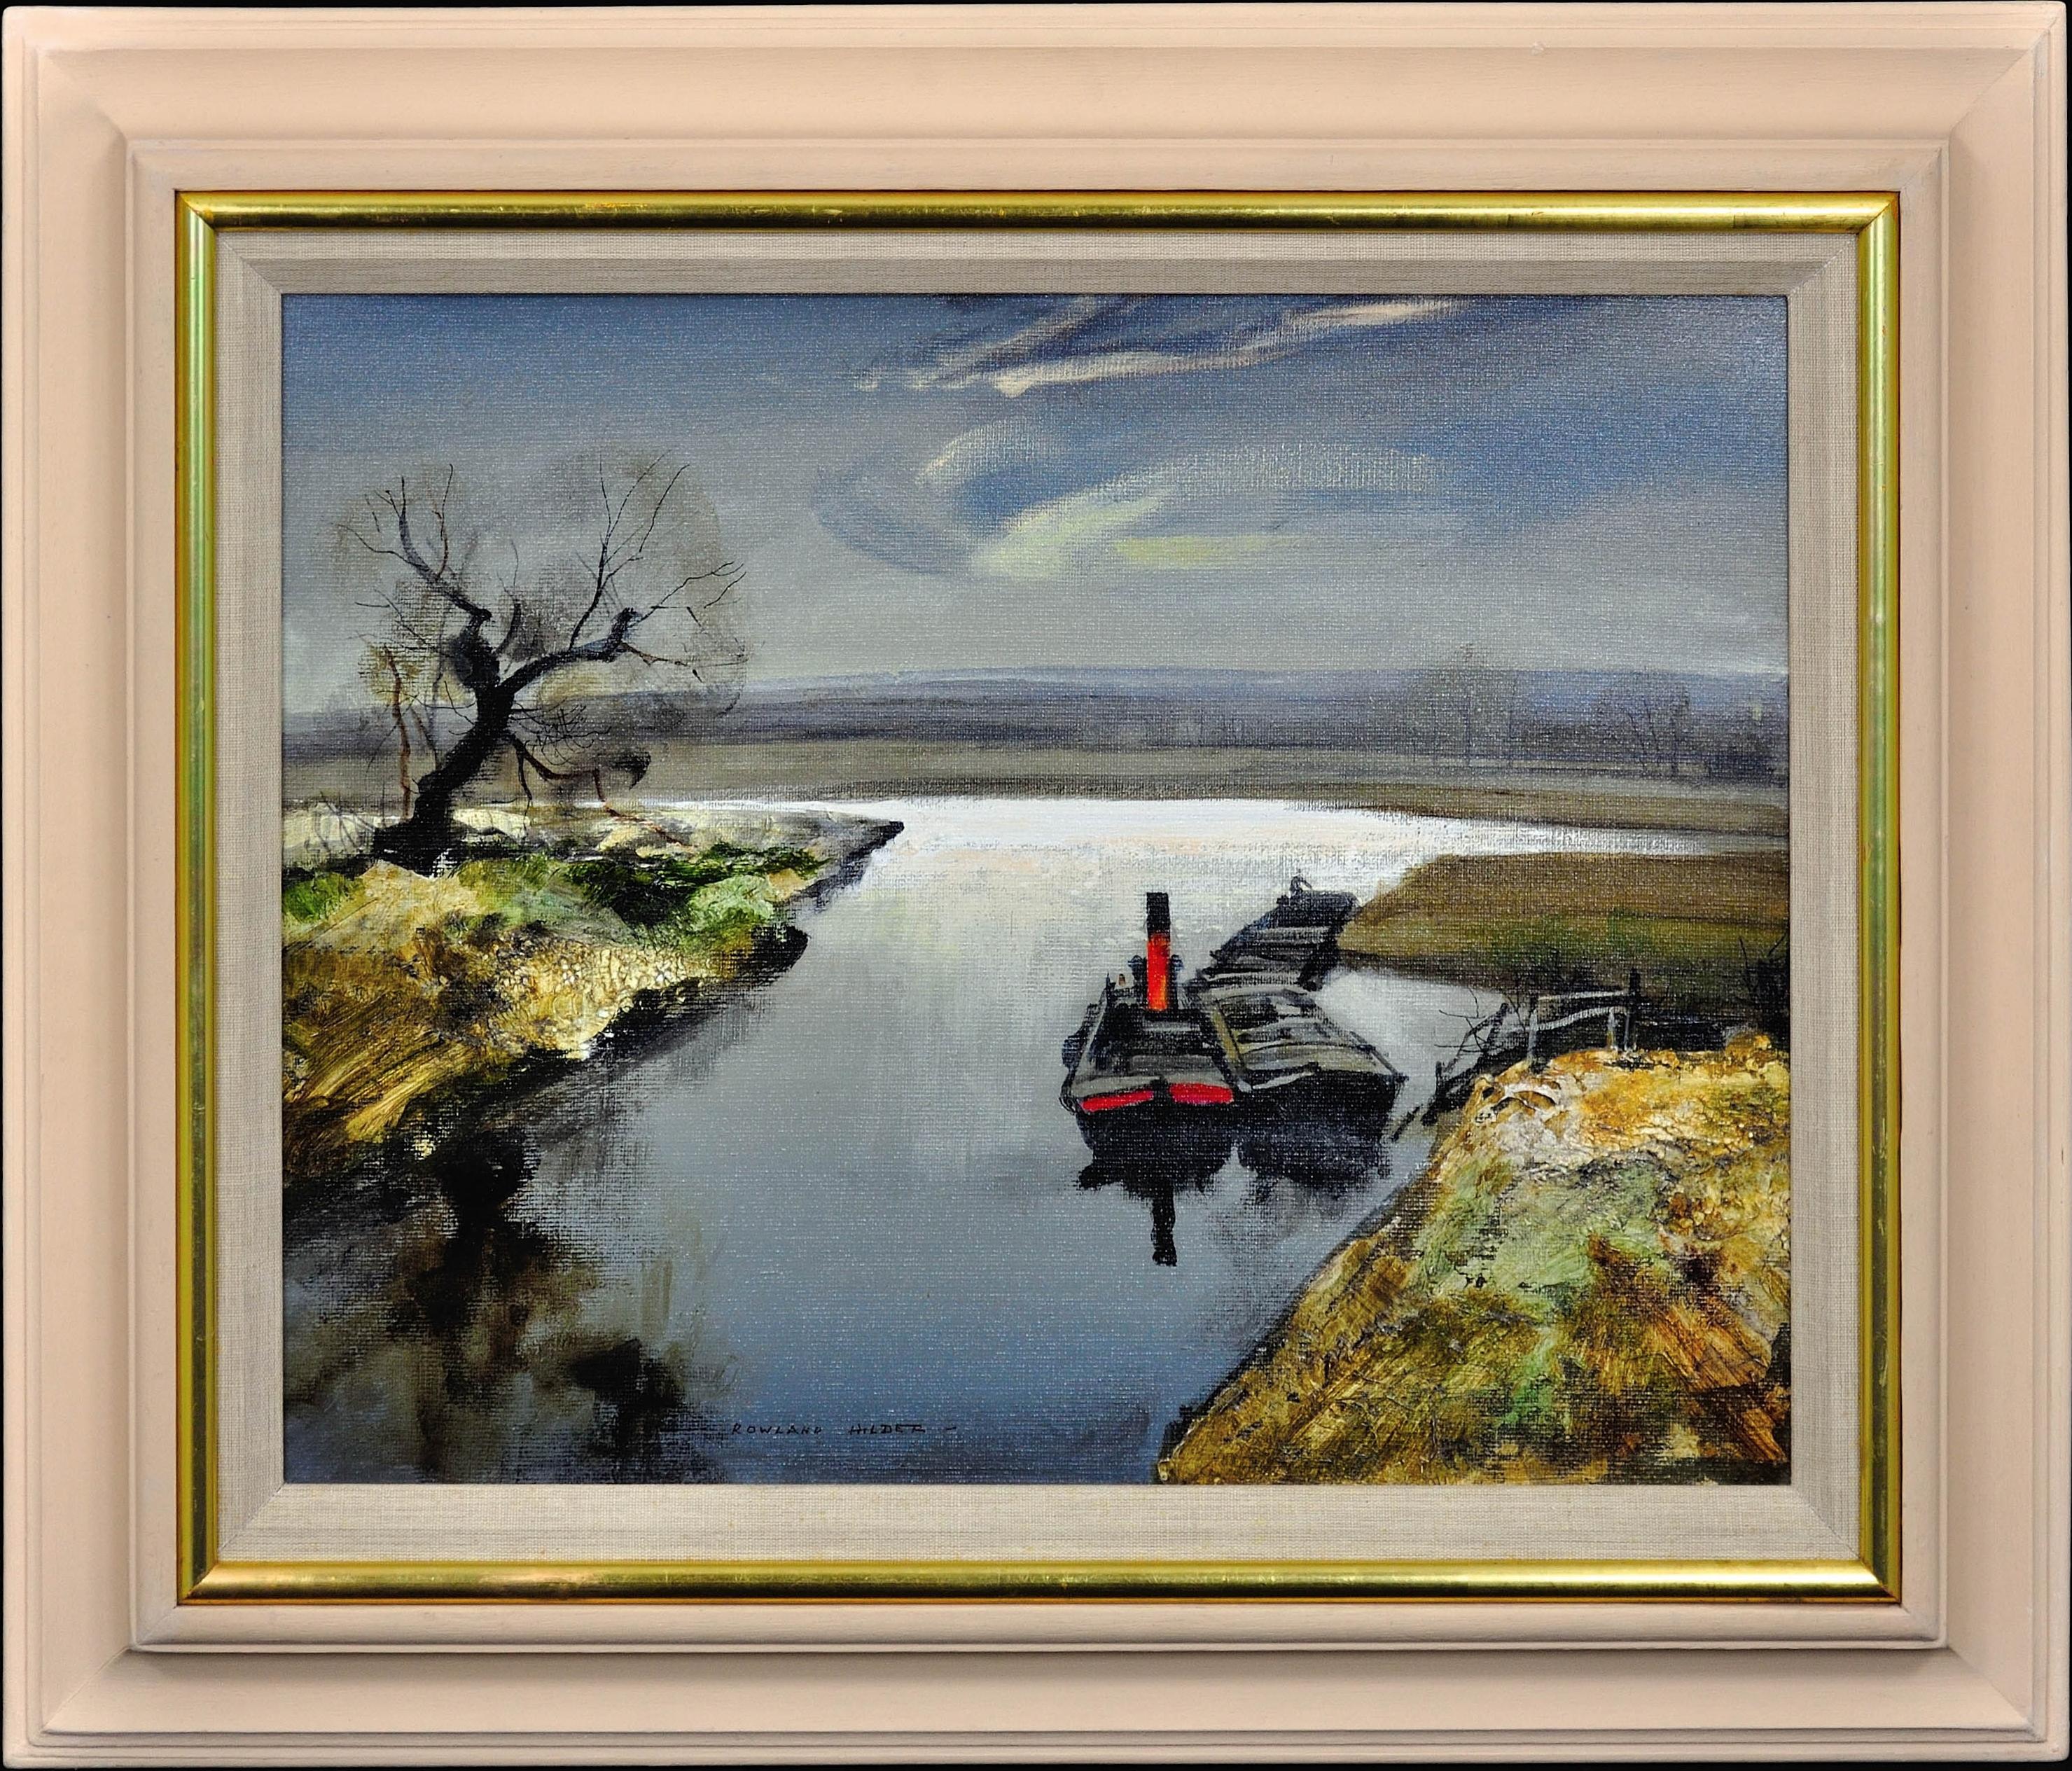 Rowland Hilder Landscape Painting - River Bure, Norfolk. East Anglia. English Rural Landscape. Tugboat and Barges.